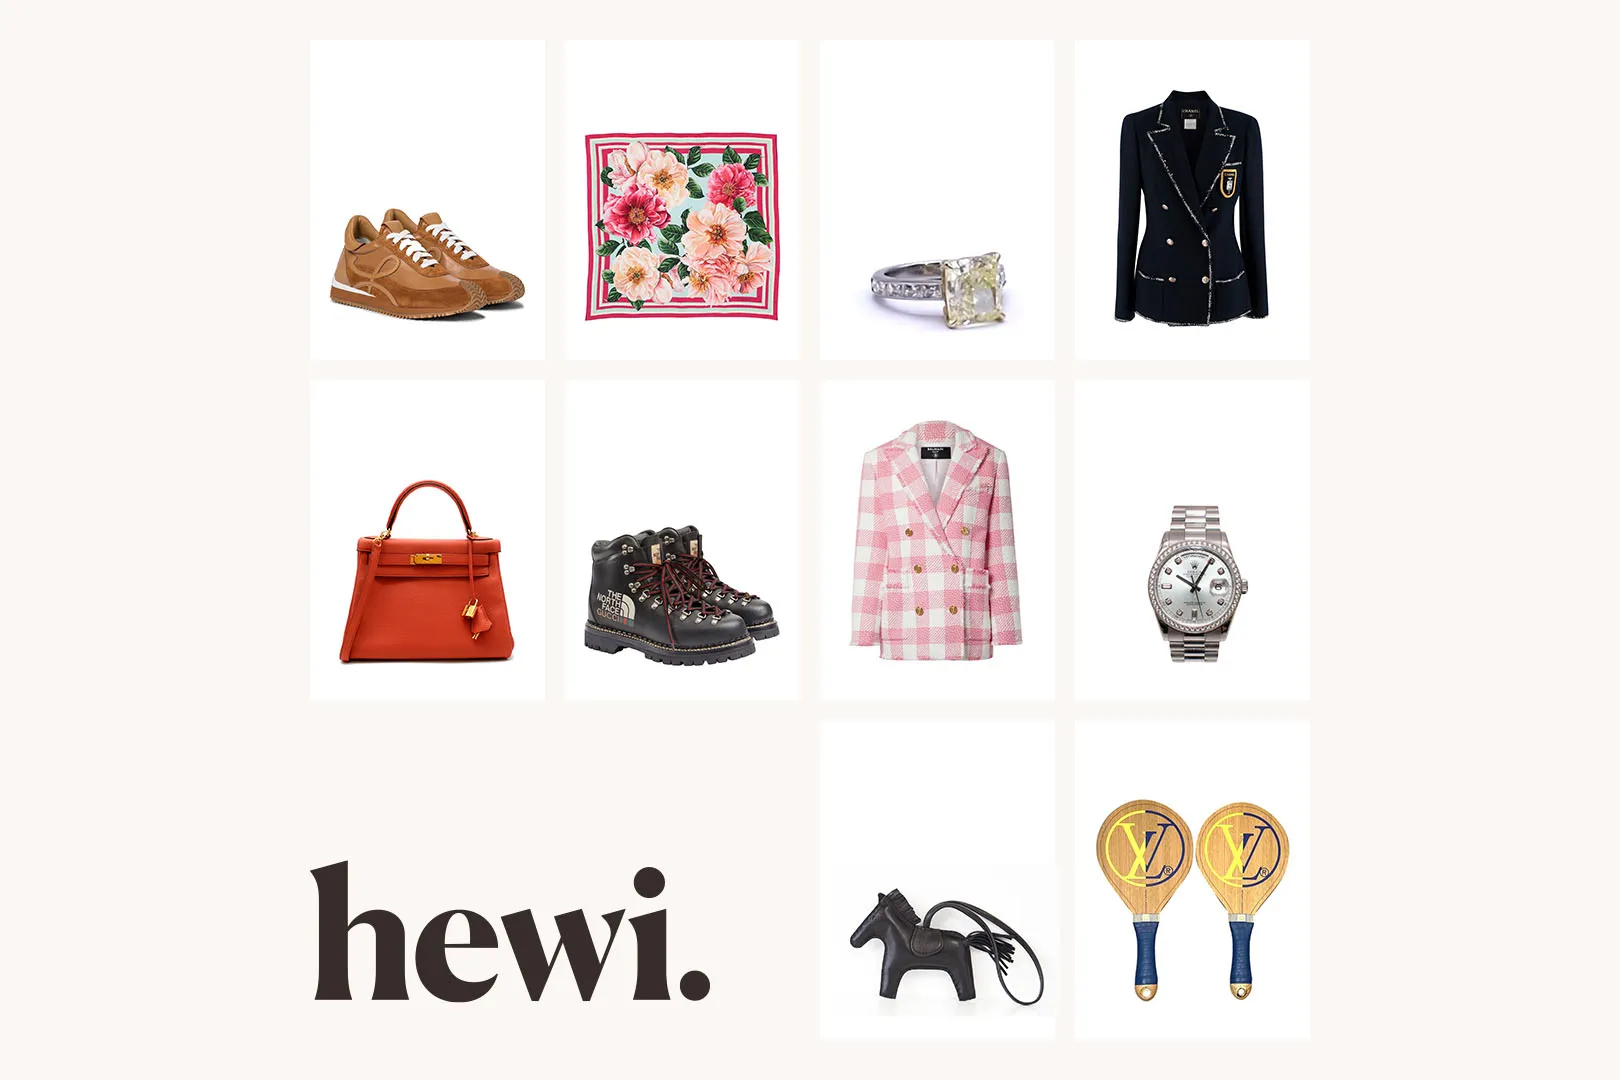 Hewi, second hand store website